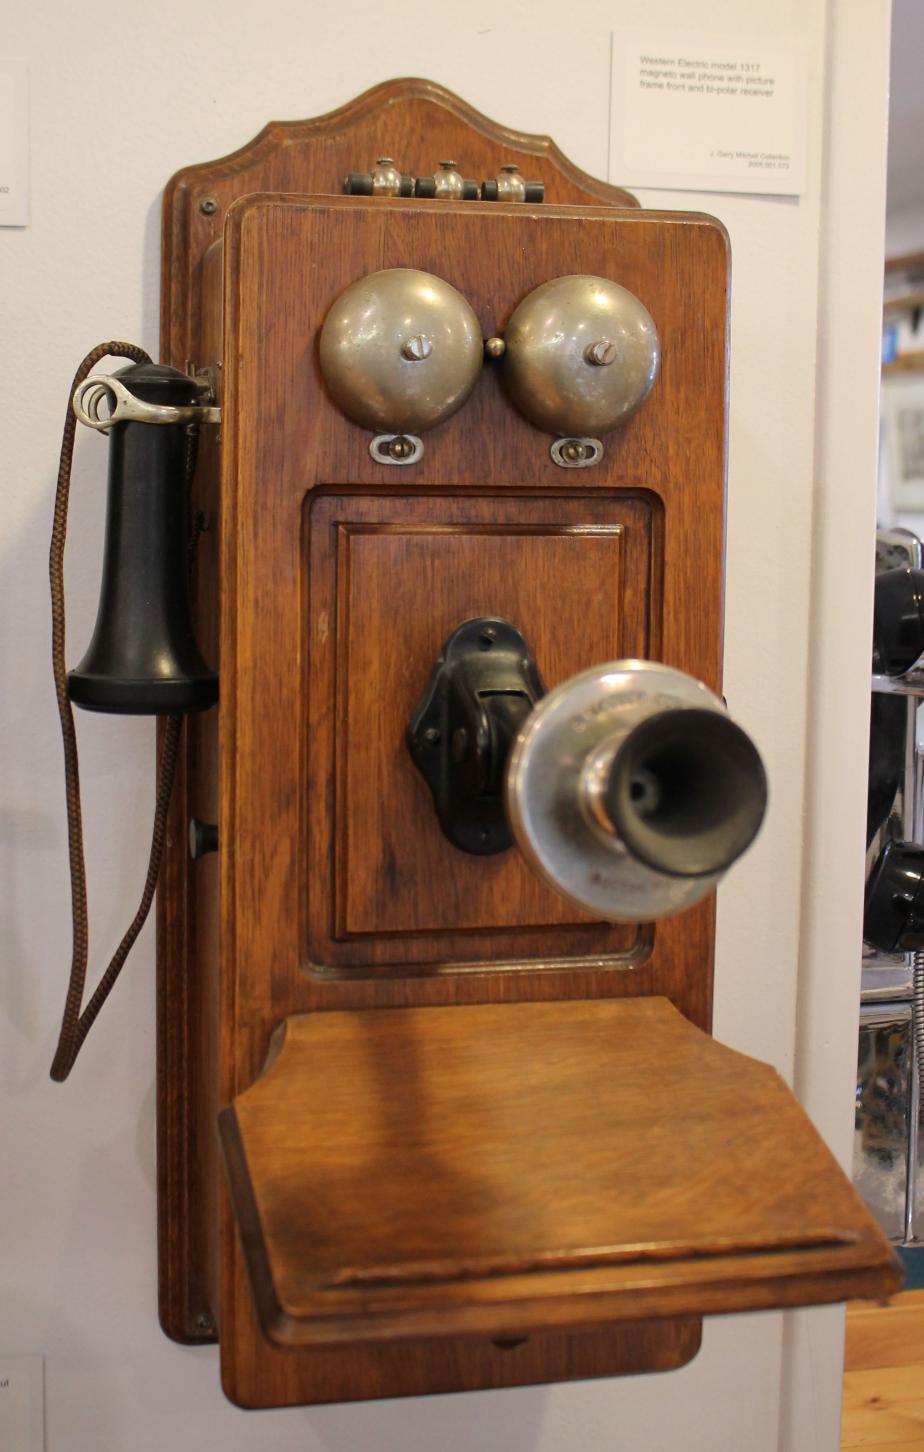 New Hampshire Telephone Museum - Western Electric 1317 Telephone